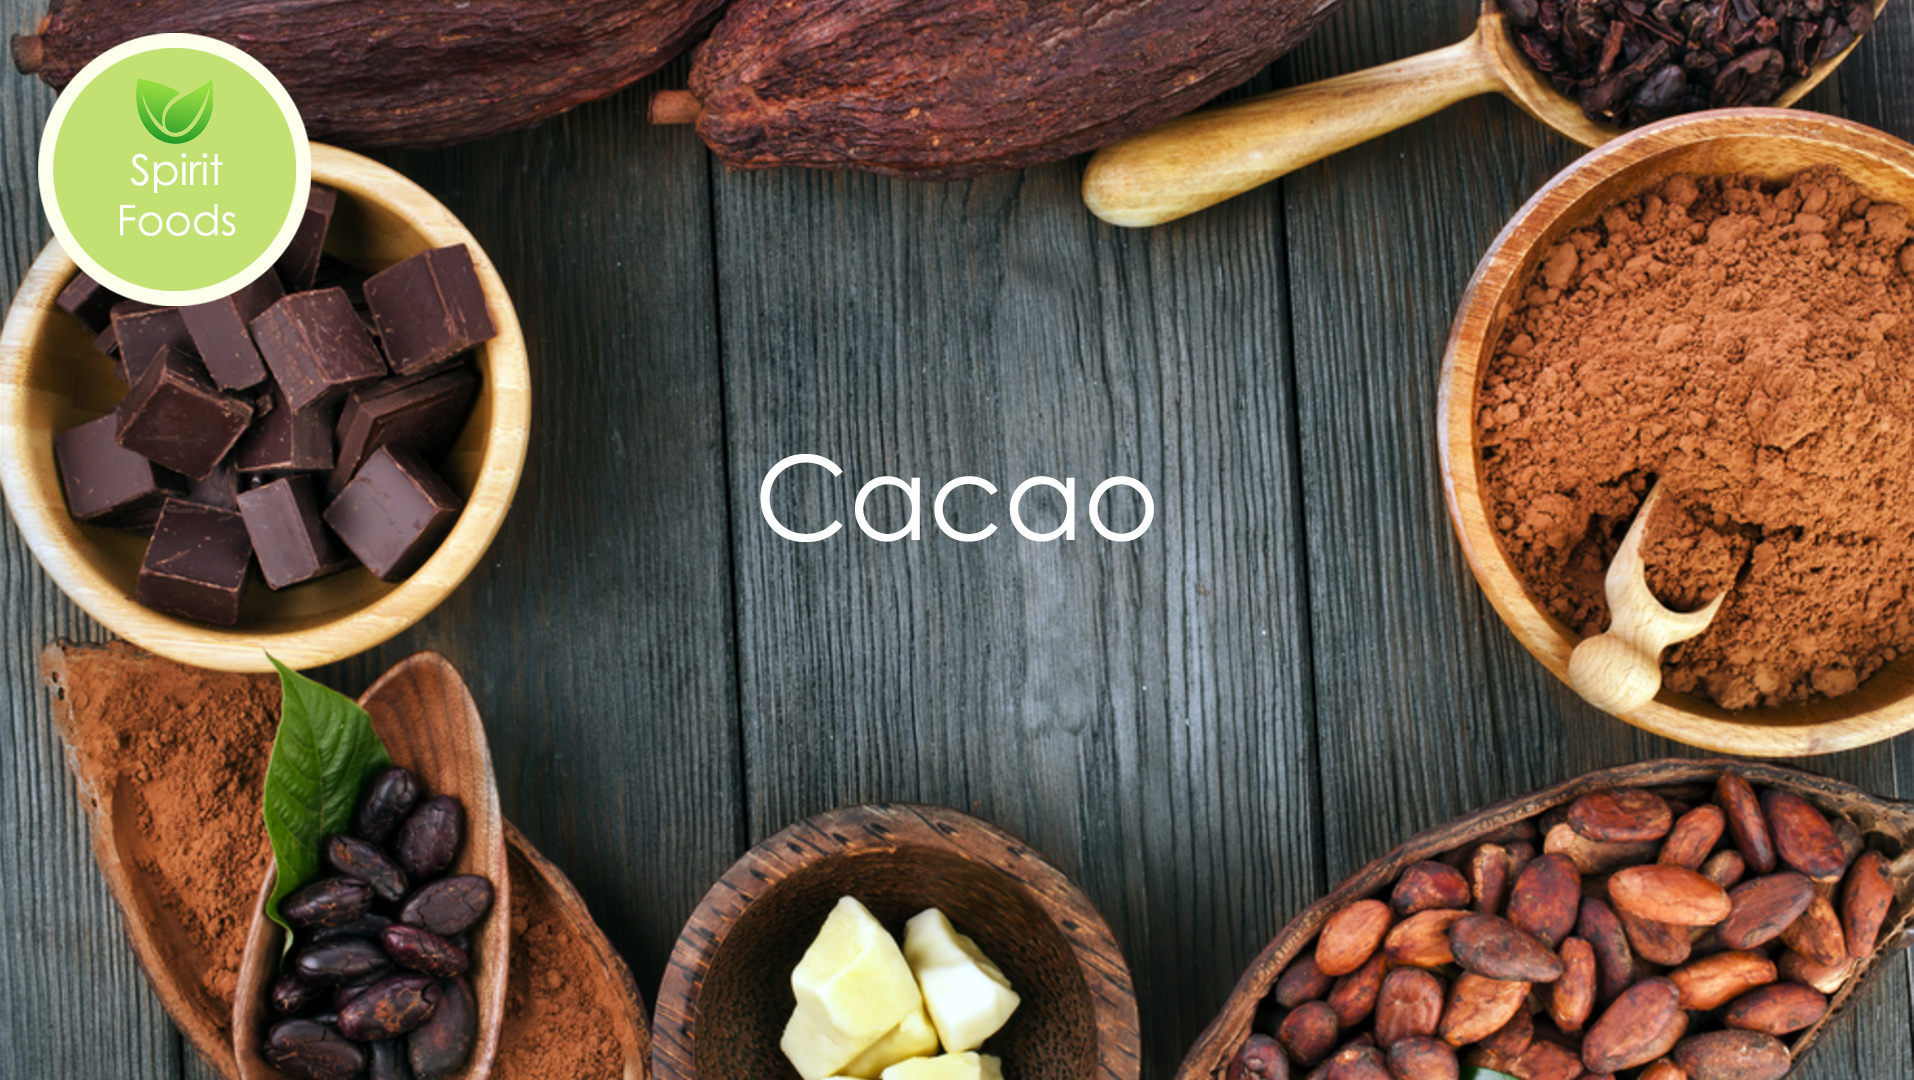 Spirit Food – Cacao